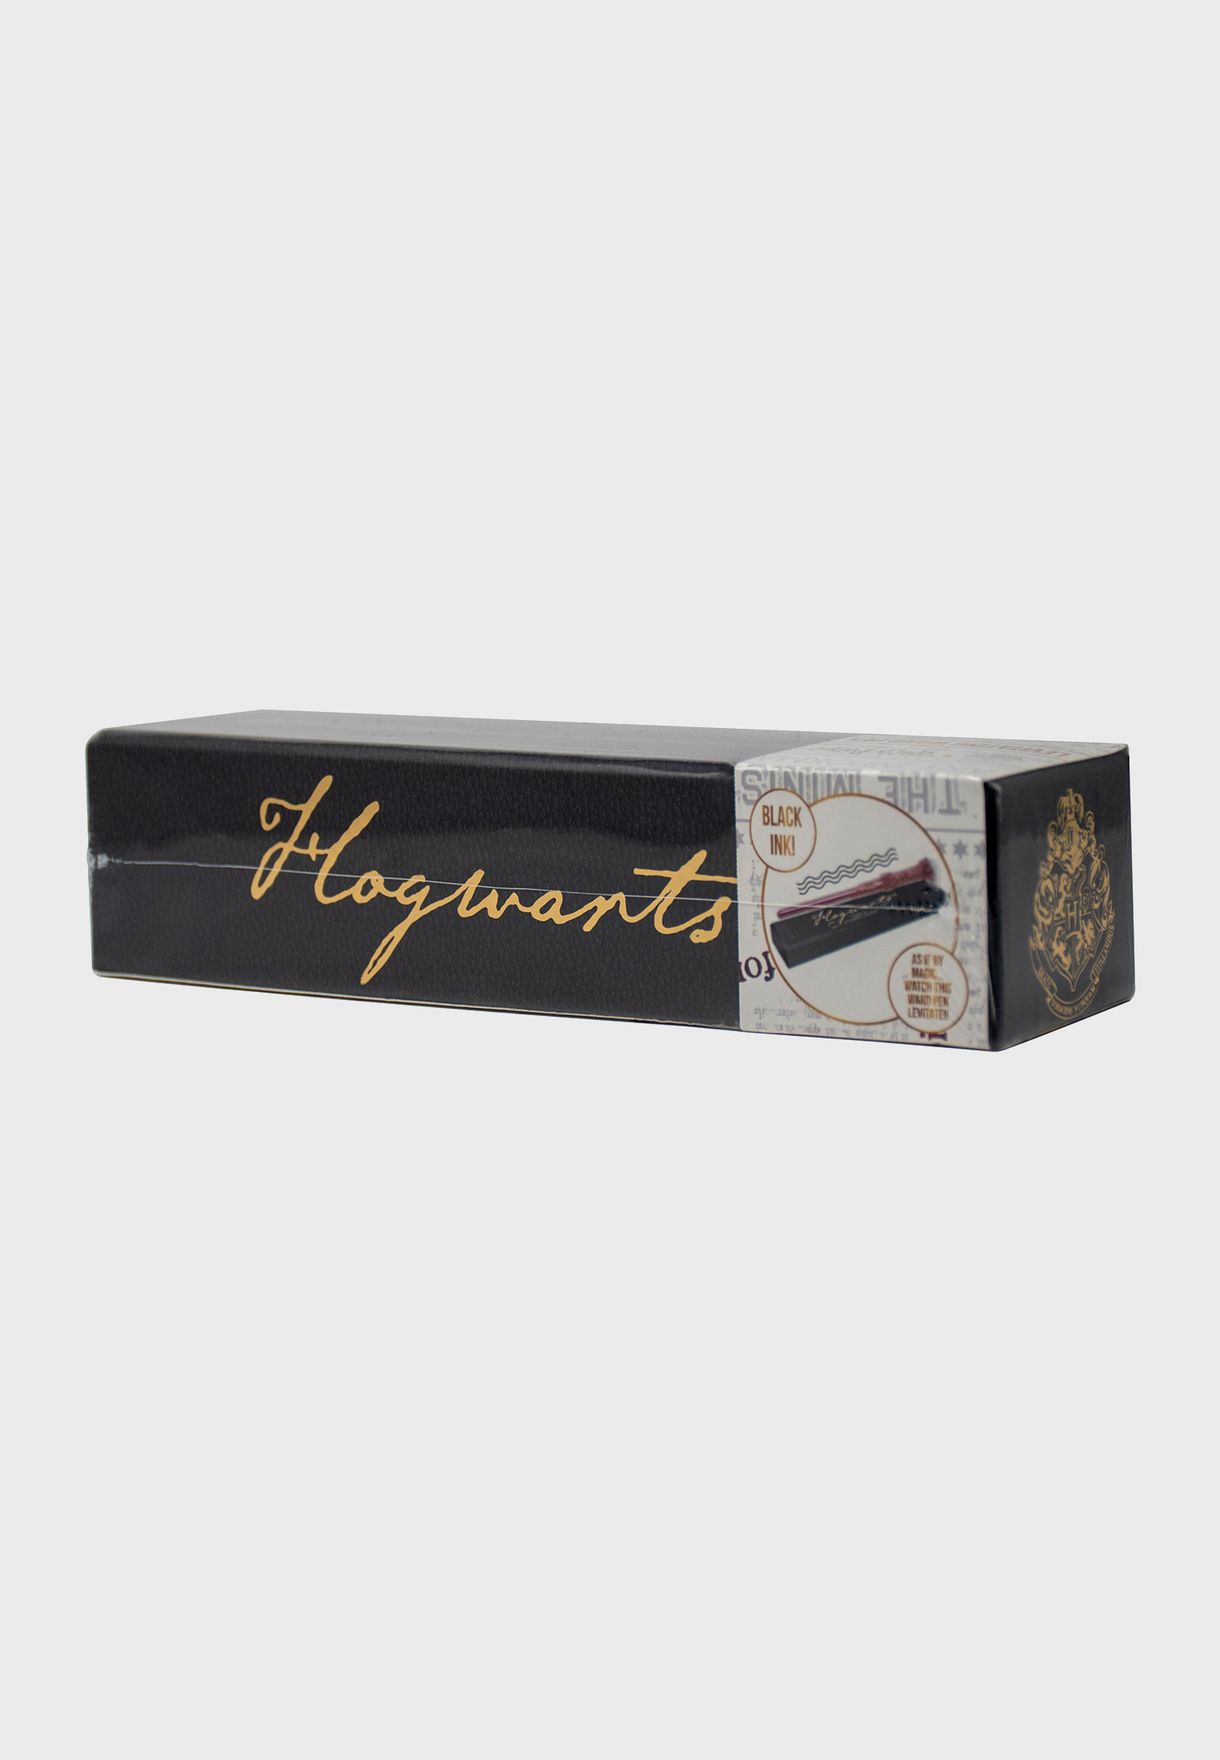 Harry Potter Levitating Wand Pen